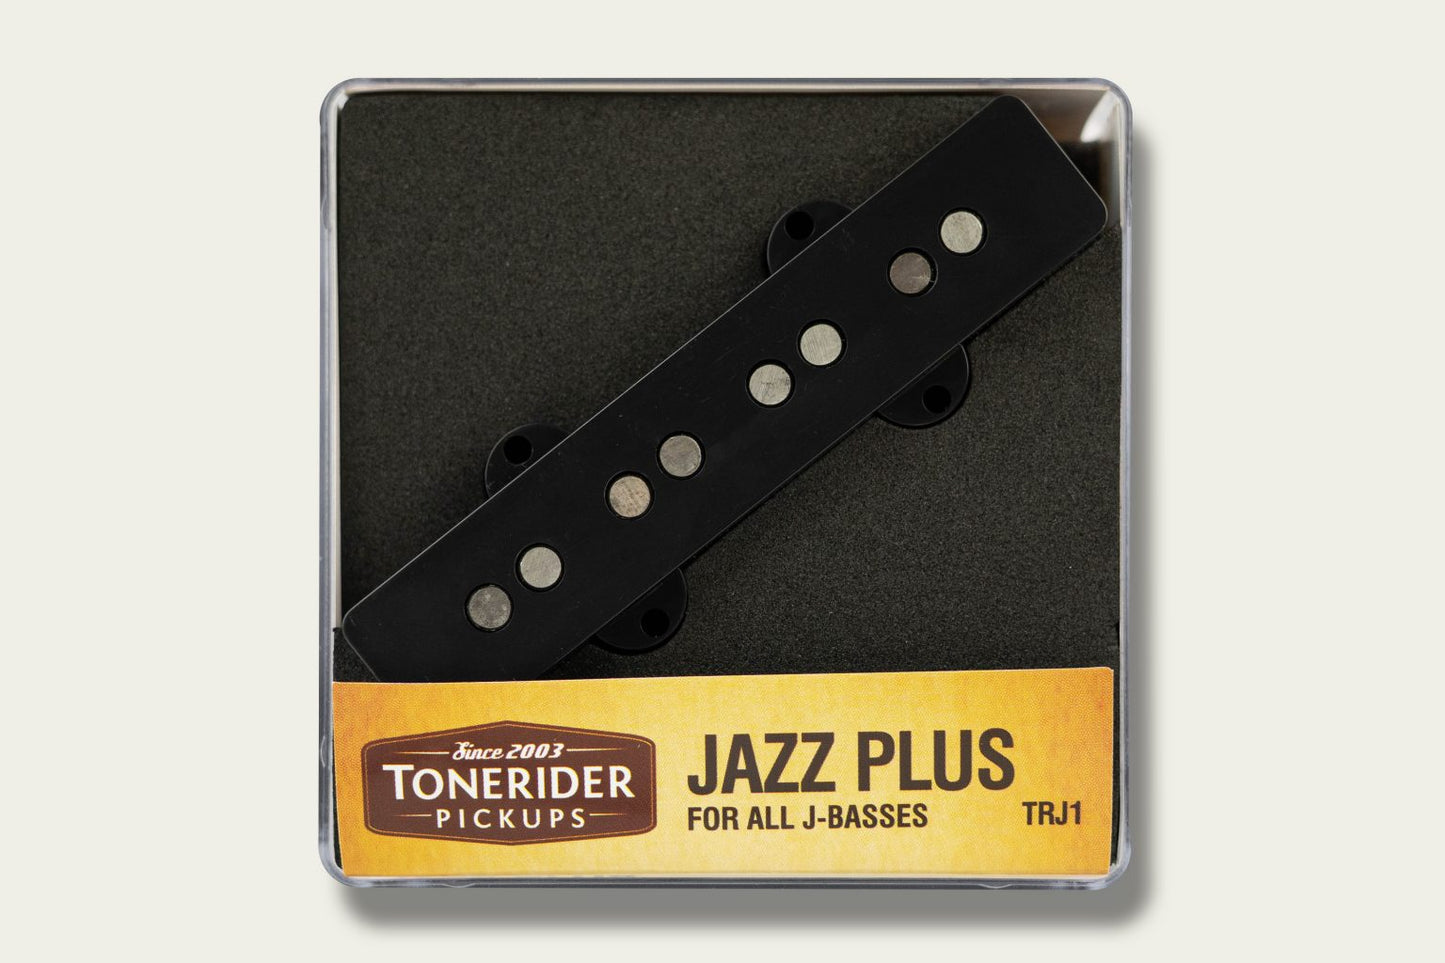 Tonerider Jazz Plus